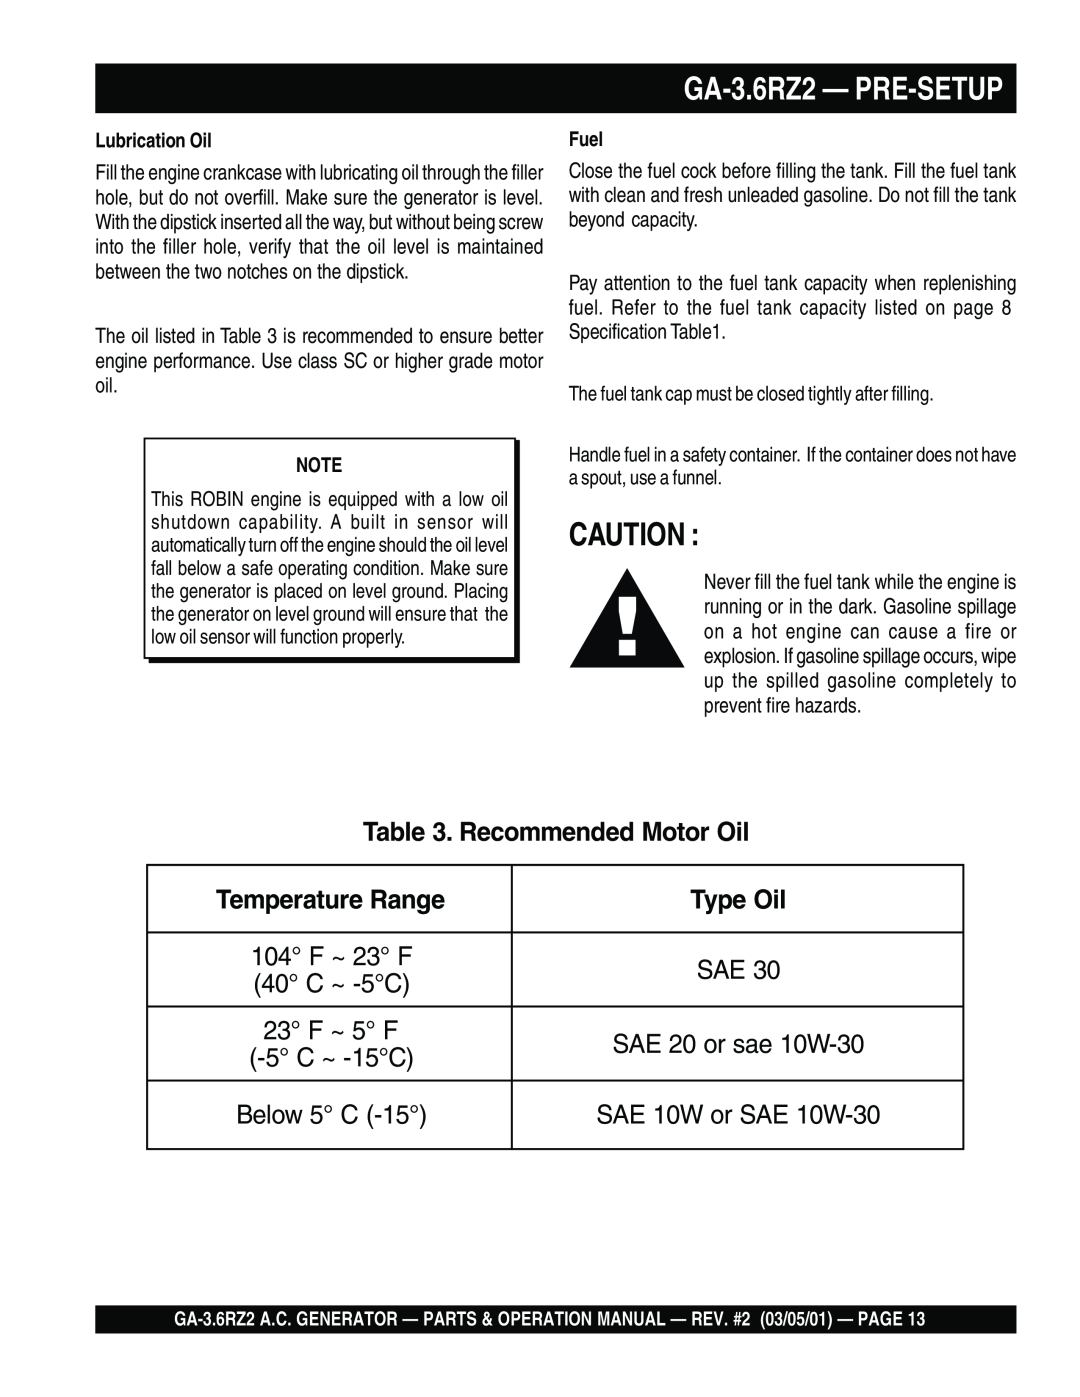 Multiquip Temperature Range, Type Oil, GA-3.6RZ2— PRE-SETUP, Recommended Motor Oil, Below 5 C, SAE 10W or SAE 10W-30 